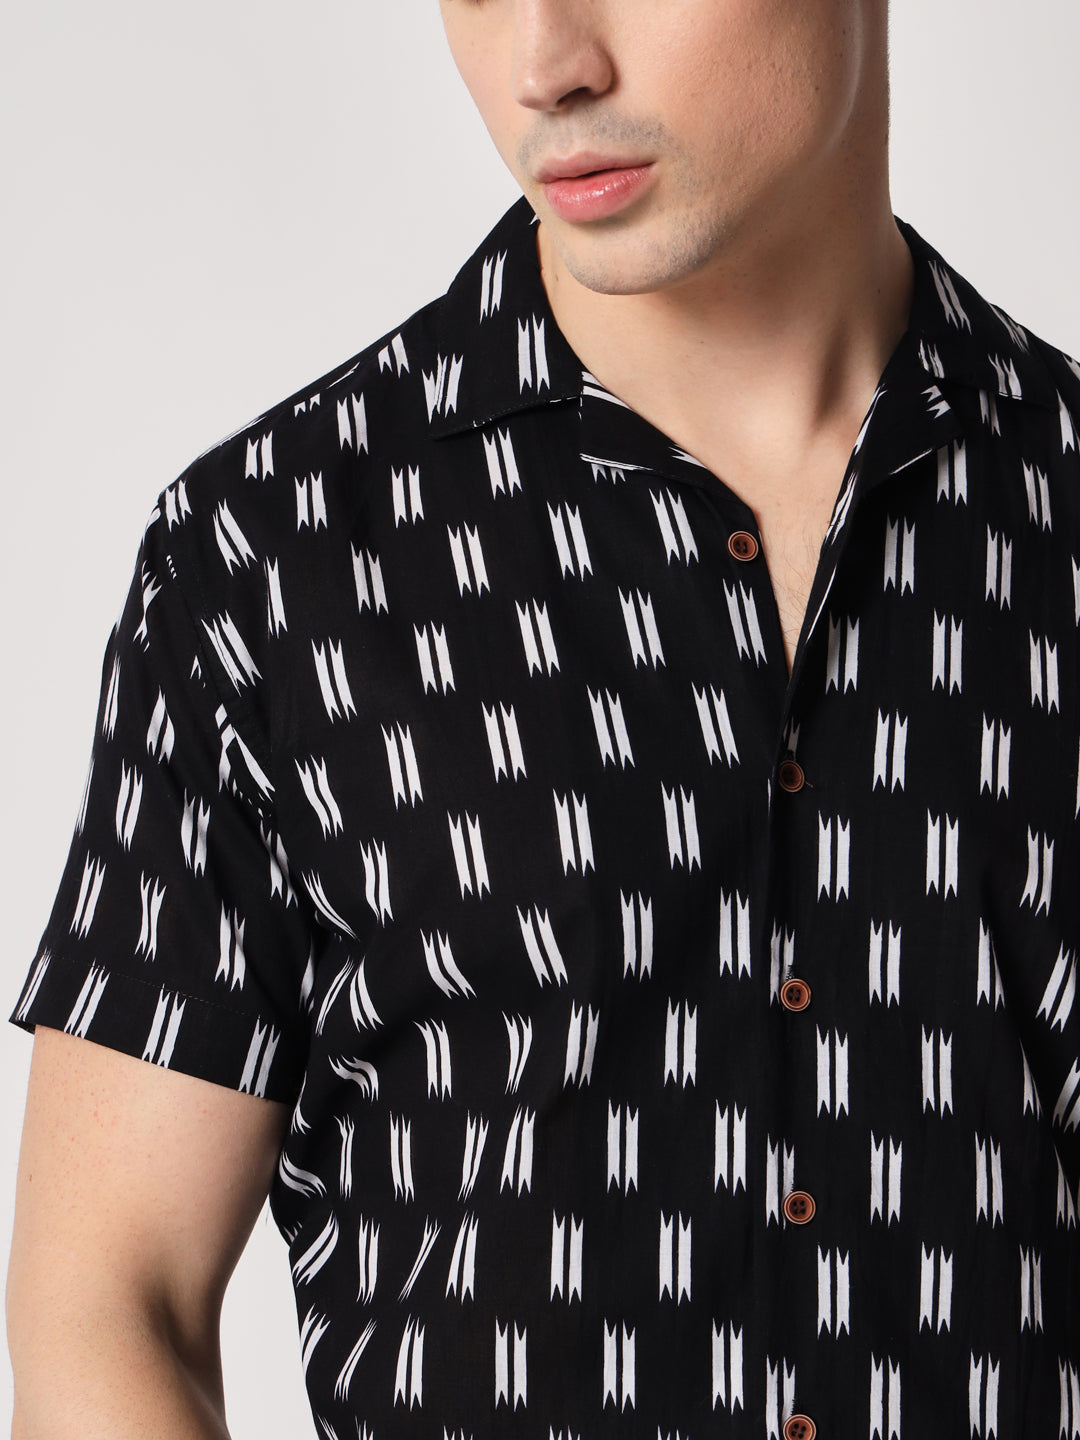 Firangi Yarn 100% Jaipuri Cotton Ikkat Cuban Collar Casual Shirt Black